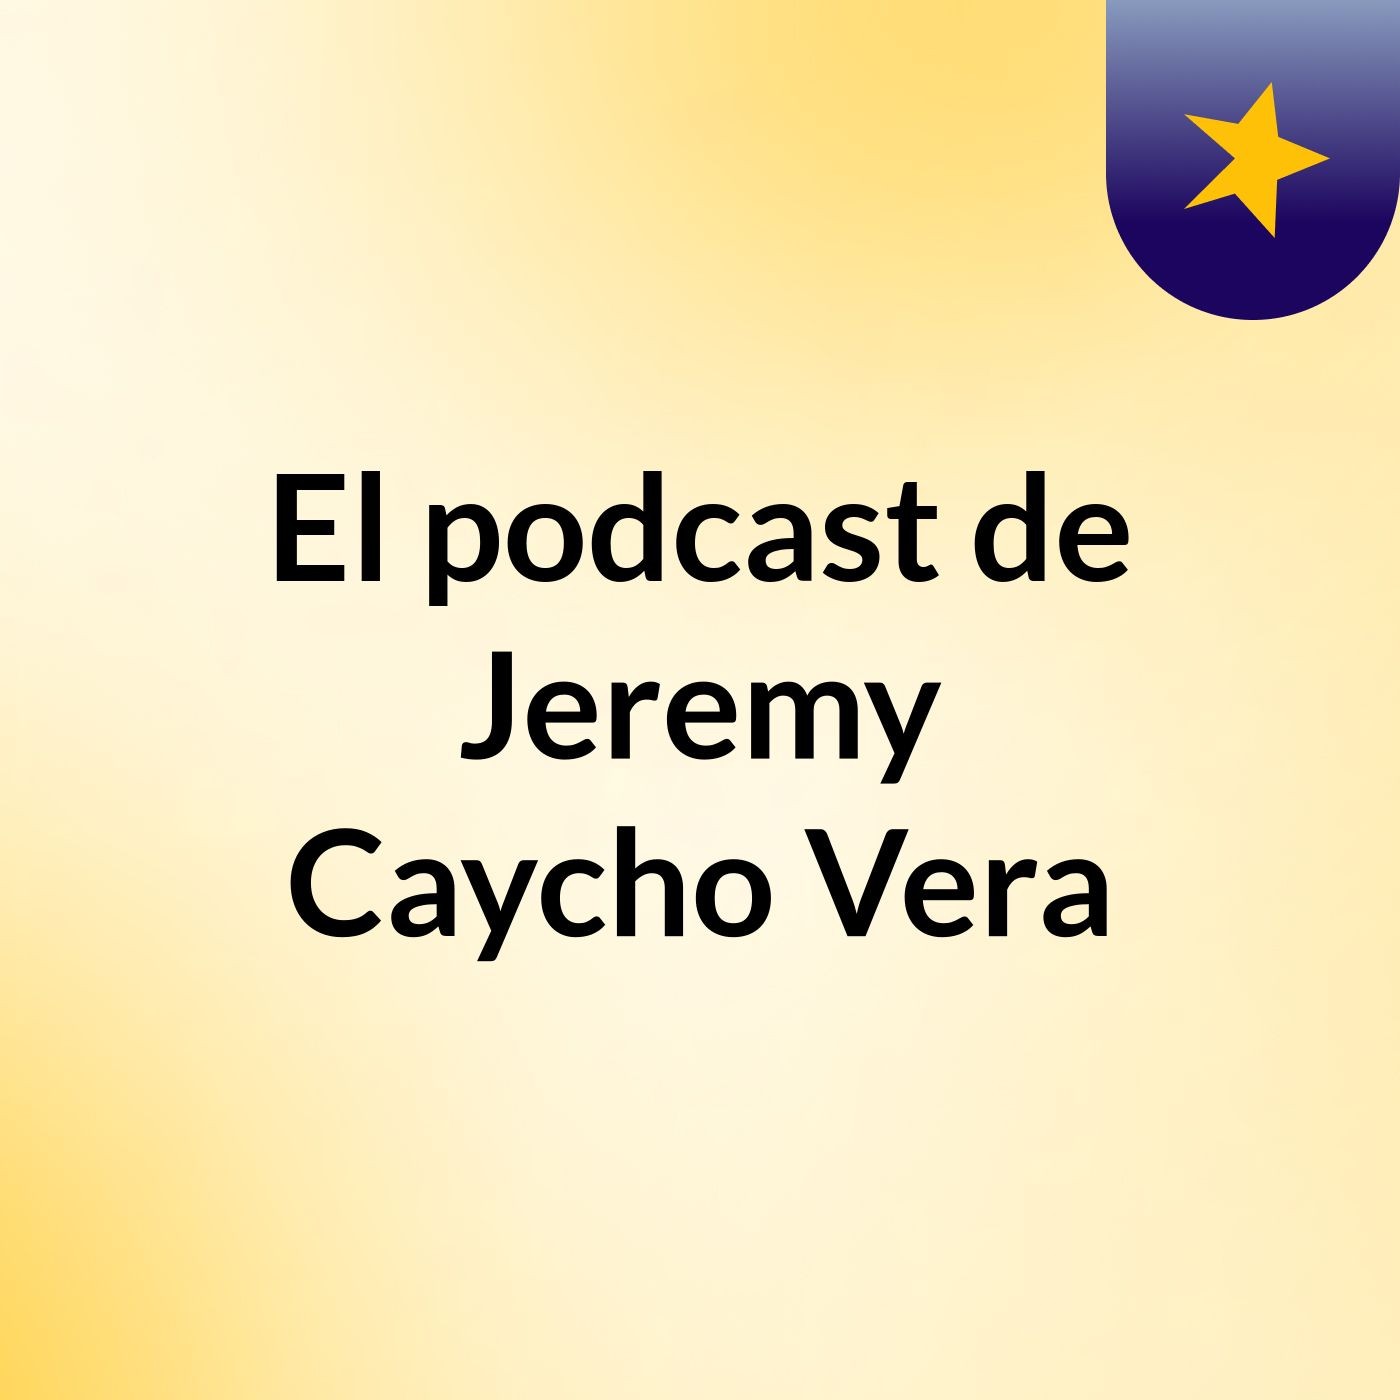 El podcast de Jeremy Caycho Vera